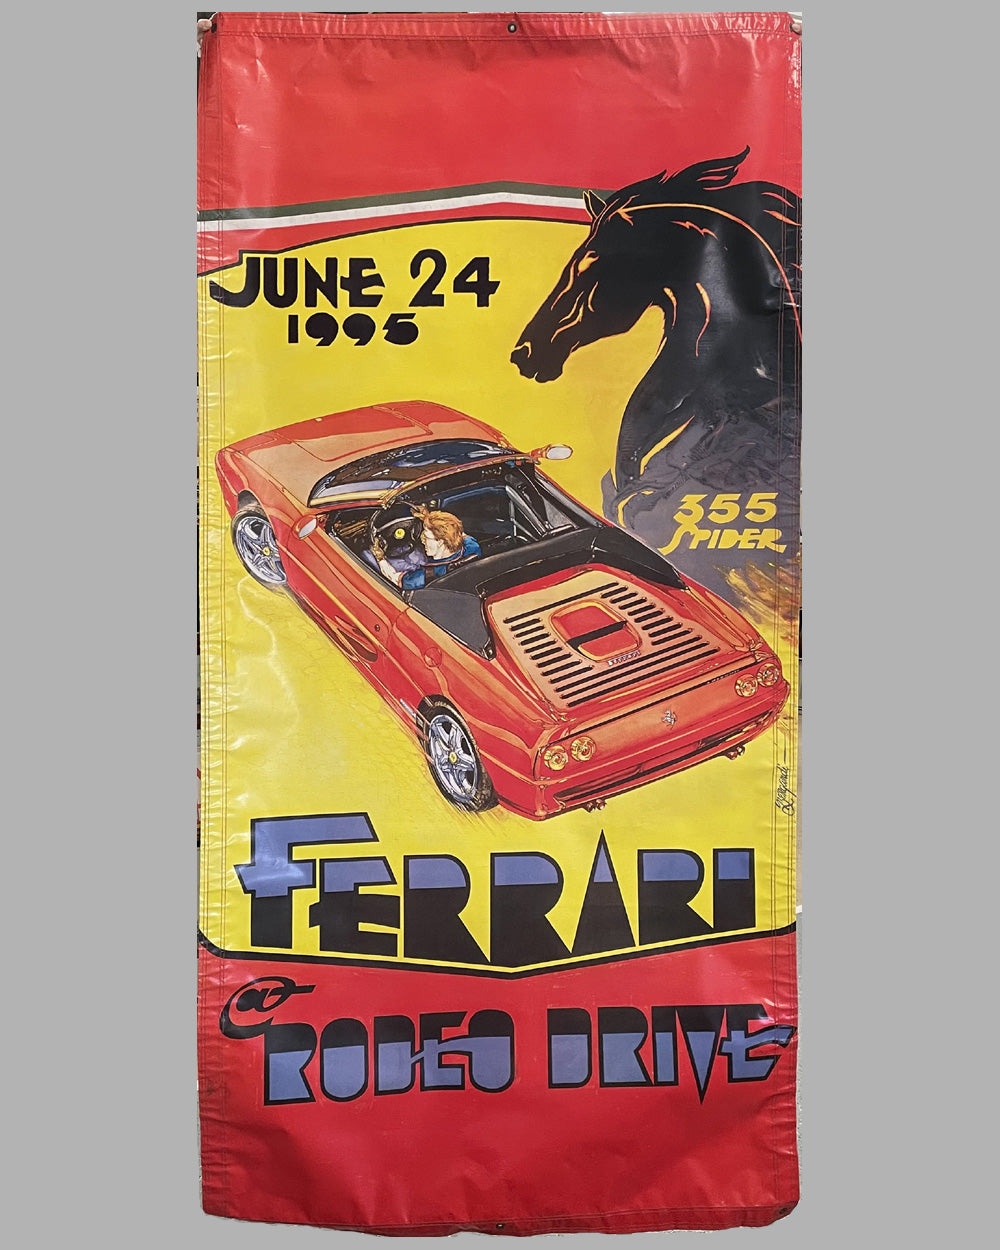 Minimalist Ferrari Super Car affiches et impressions par Hachico - Printler